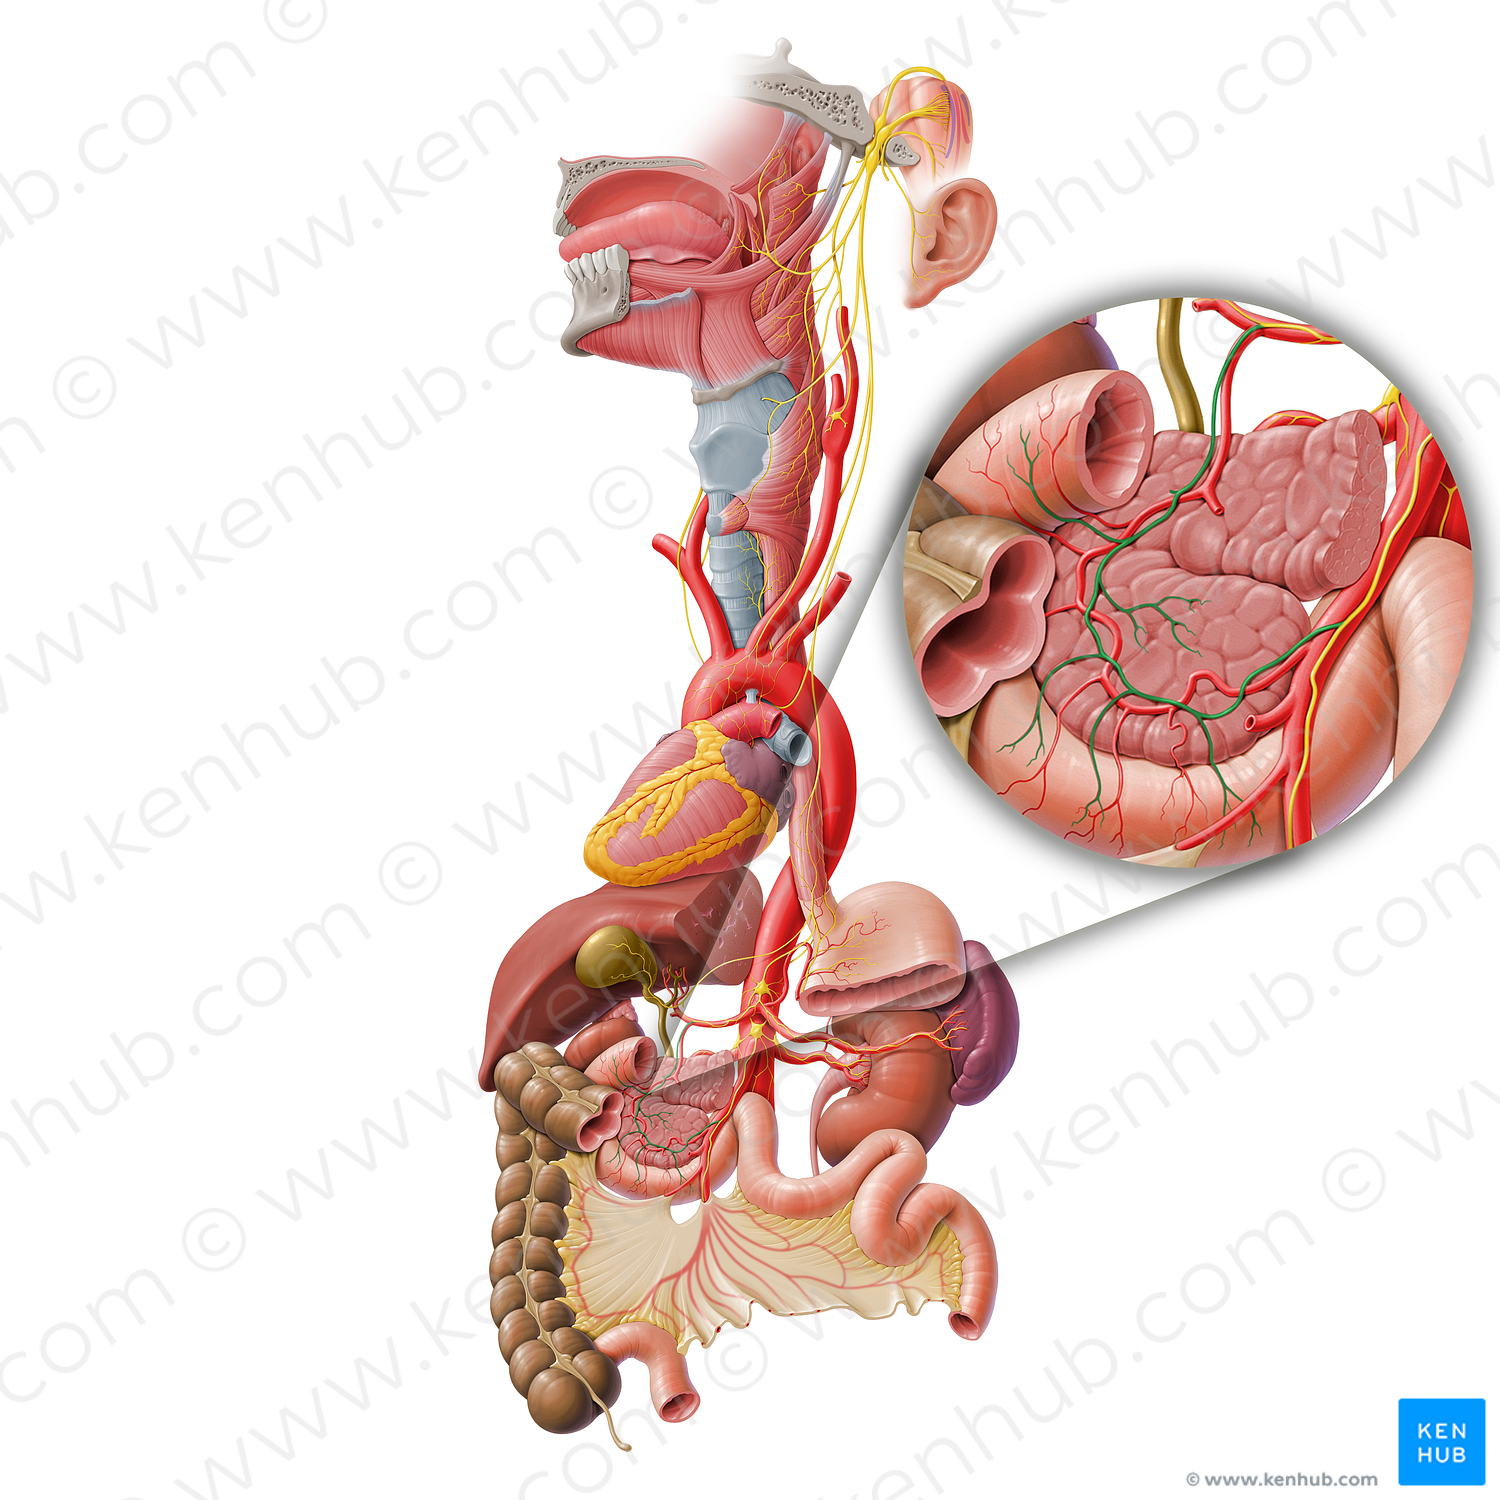 Pancreatic plexus (#8019)